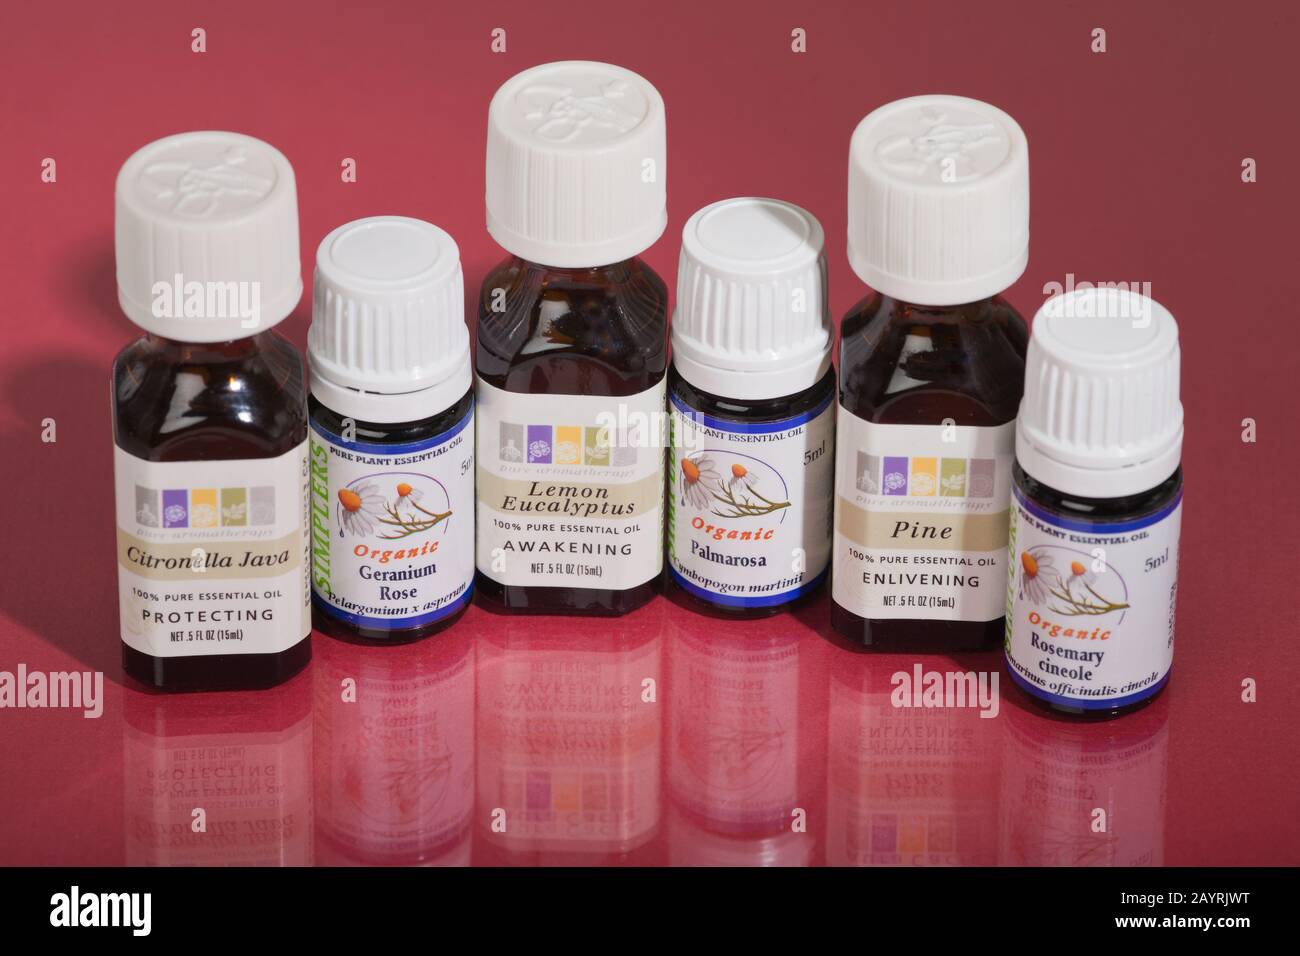 Grouping of six different varieties of plant oils (Citronella Java, Geranium Rose, Lemon Eucalyptus, Palmarosa, Pine, Rosemary cineole). Stock Photo